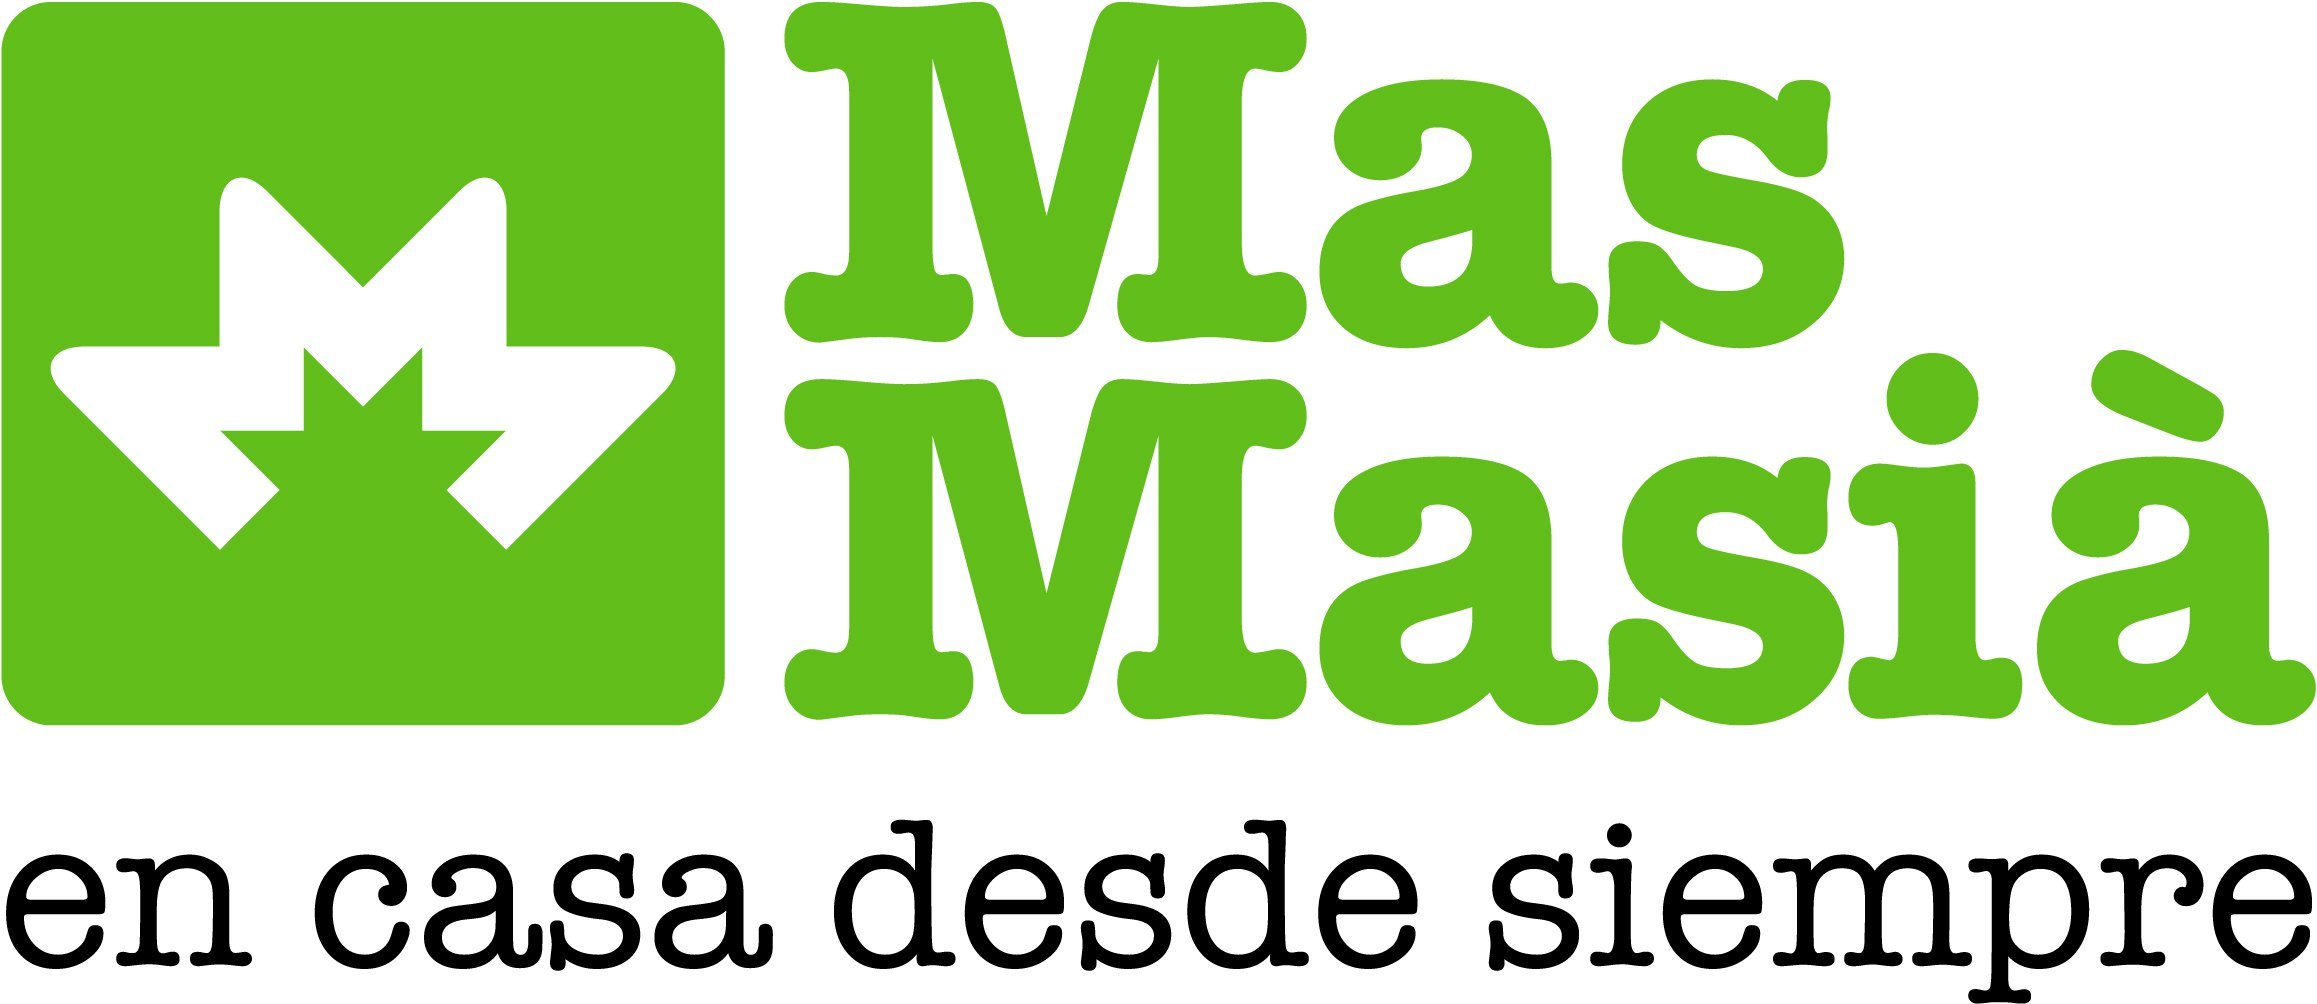 Logo Mas-Masiá, también conocido como mas masia